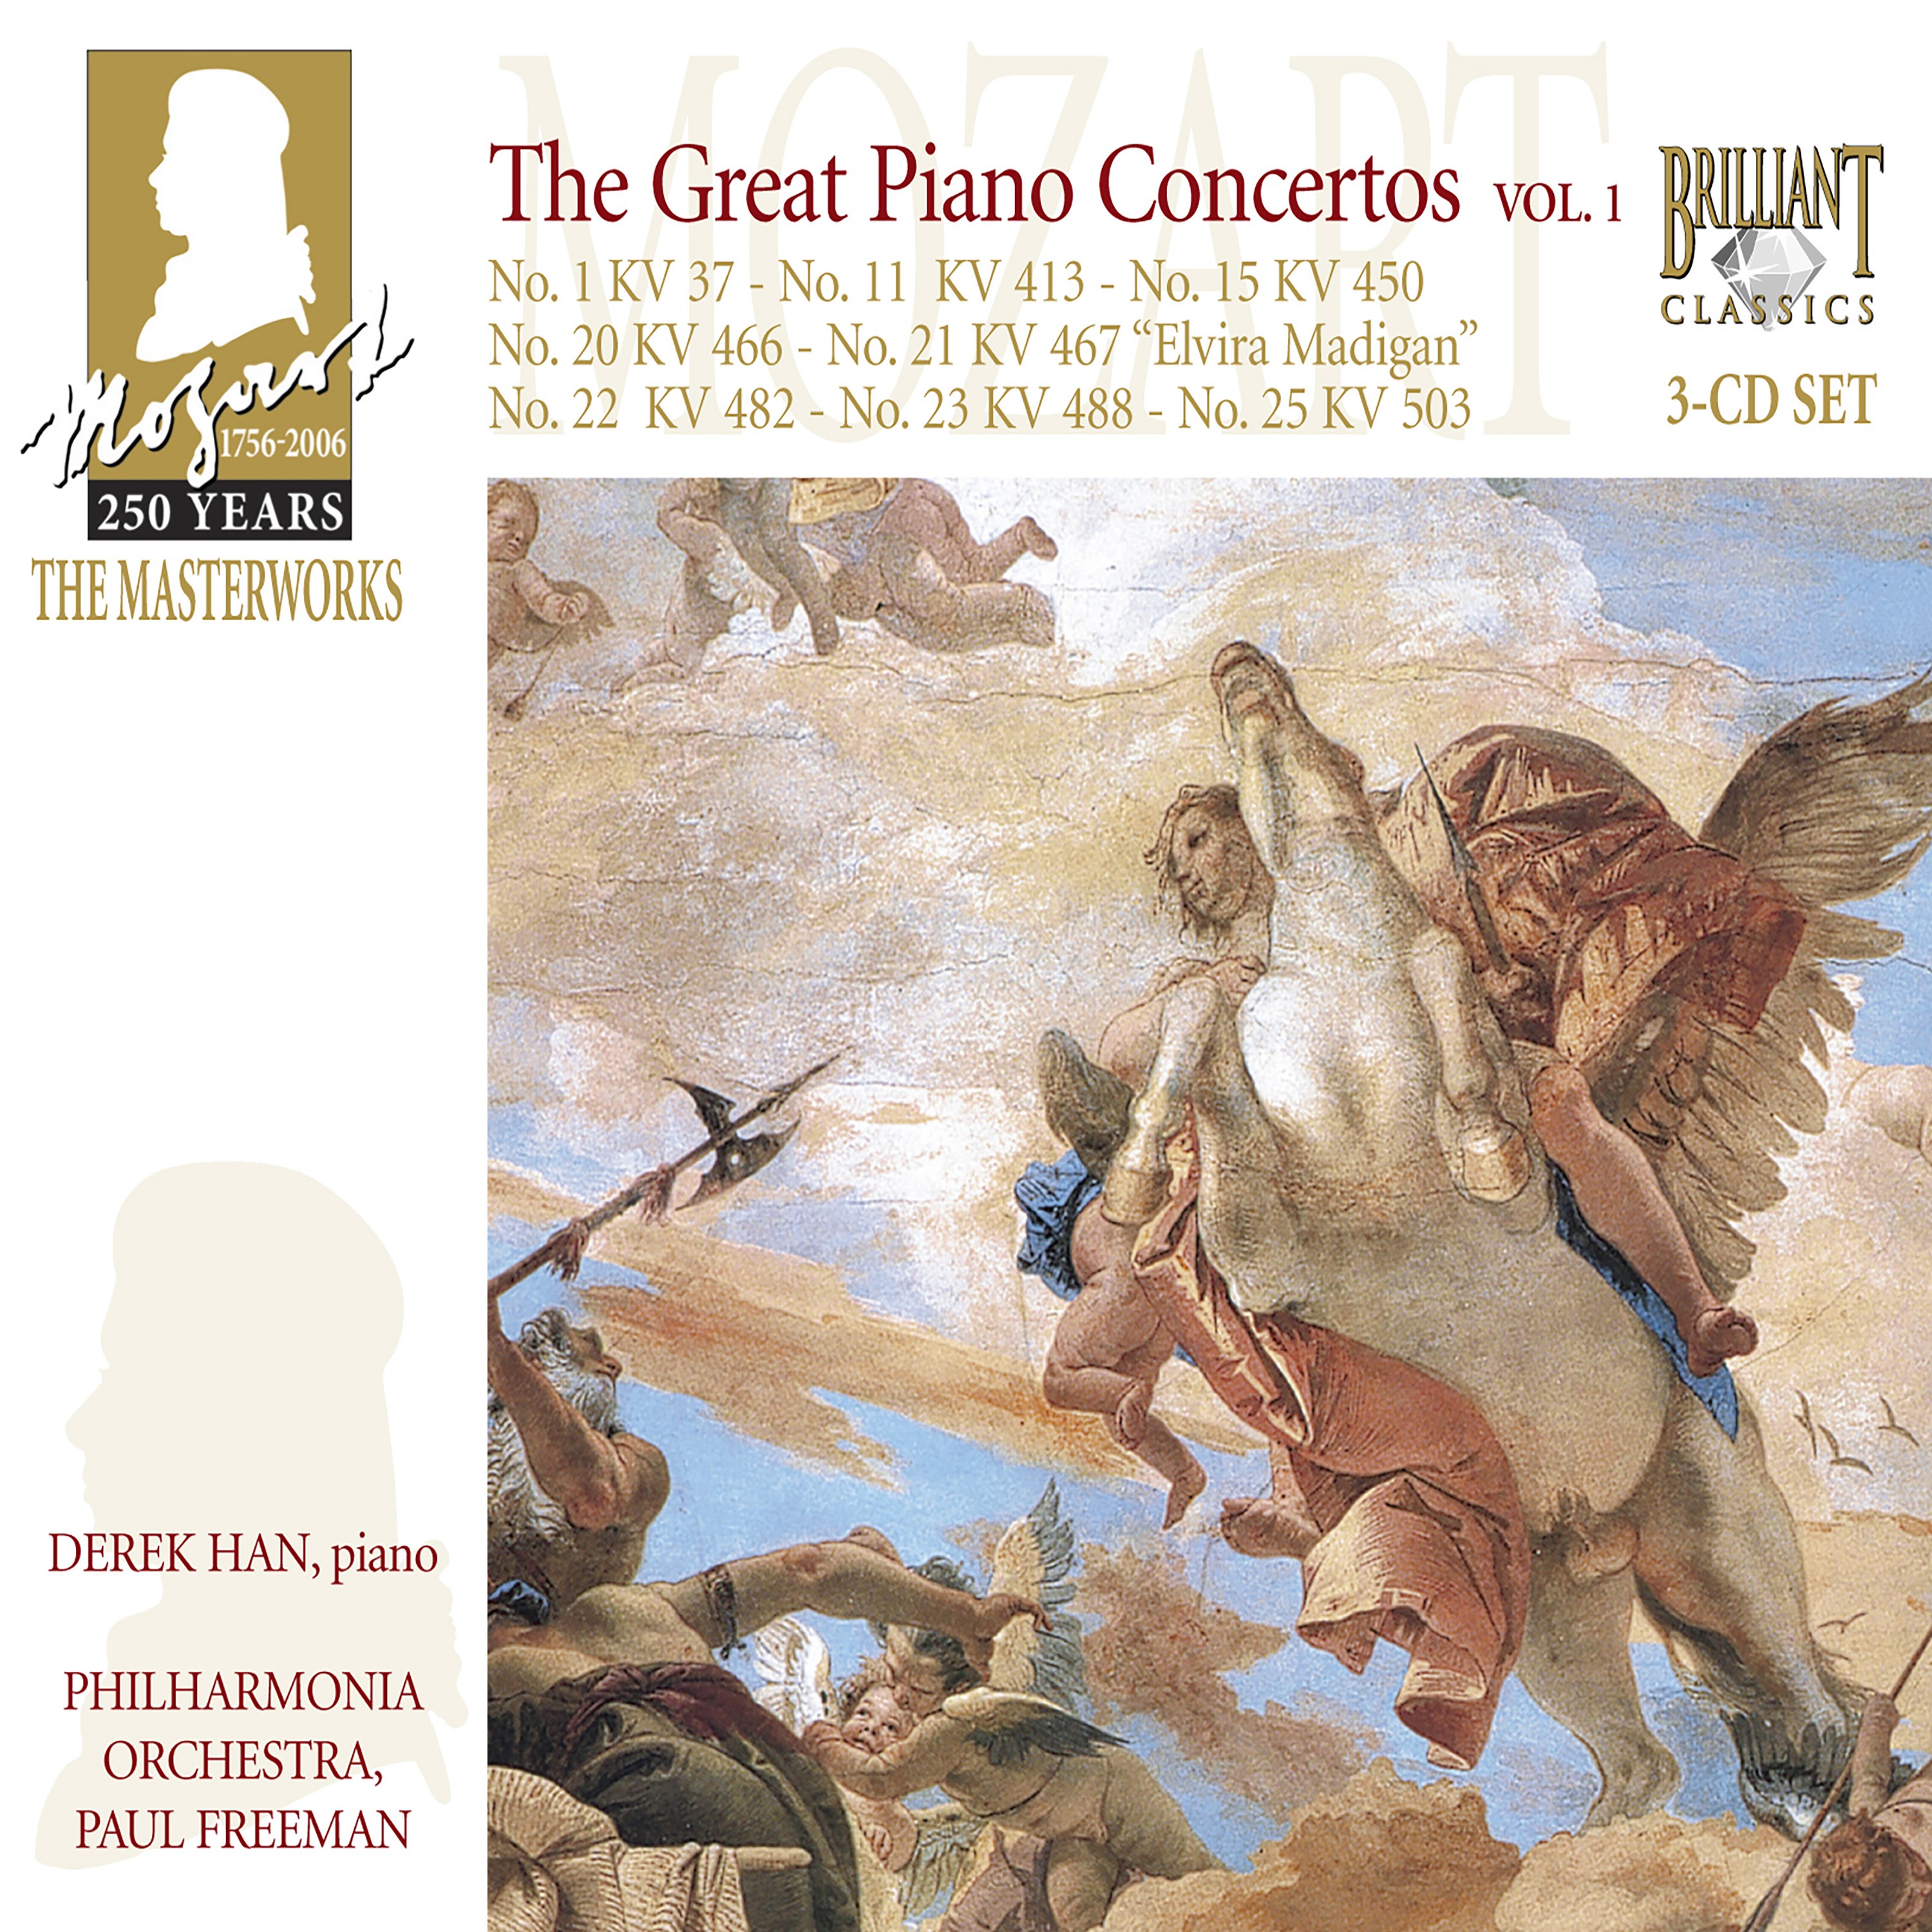 Piano Concerto No. 21 in C Major, K. 467: III. Allegro vivace assai